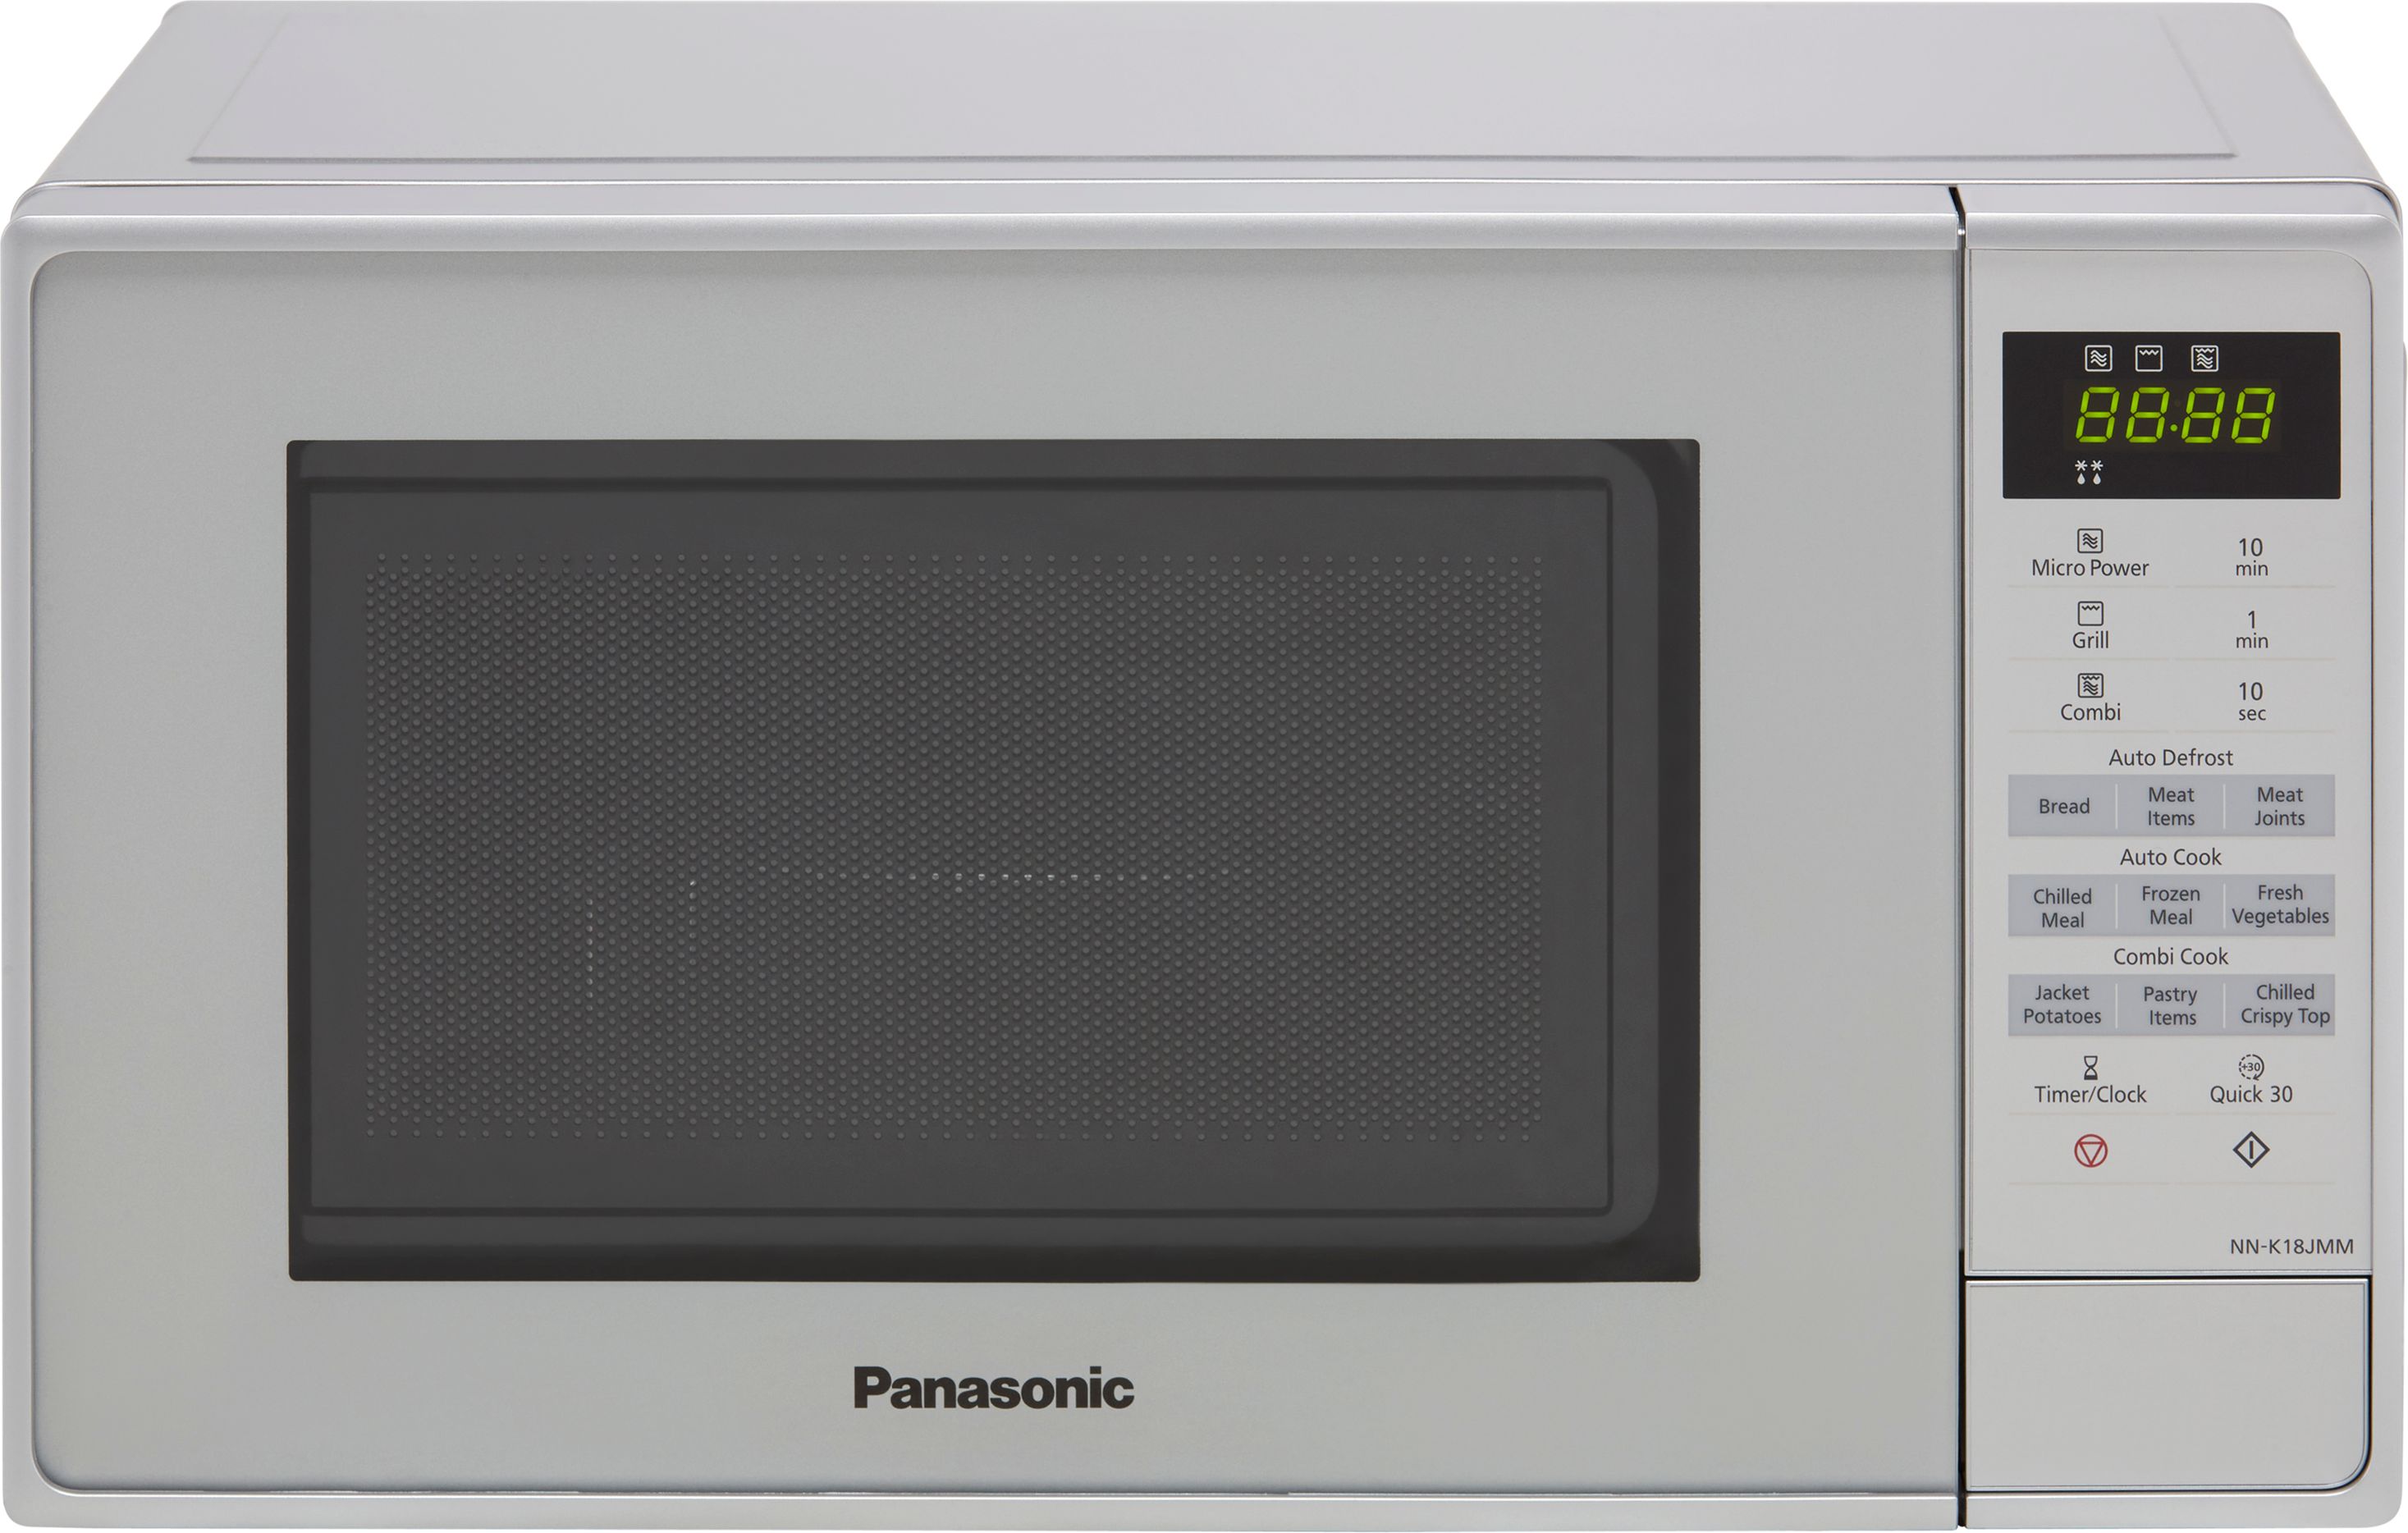 Panasonic NN-K18JMMBPQ 26cm tall, 44cm wide, Freestanding Compact Microwave - Silver, Silver